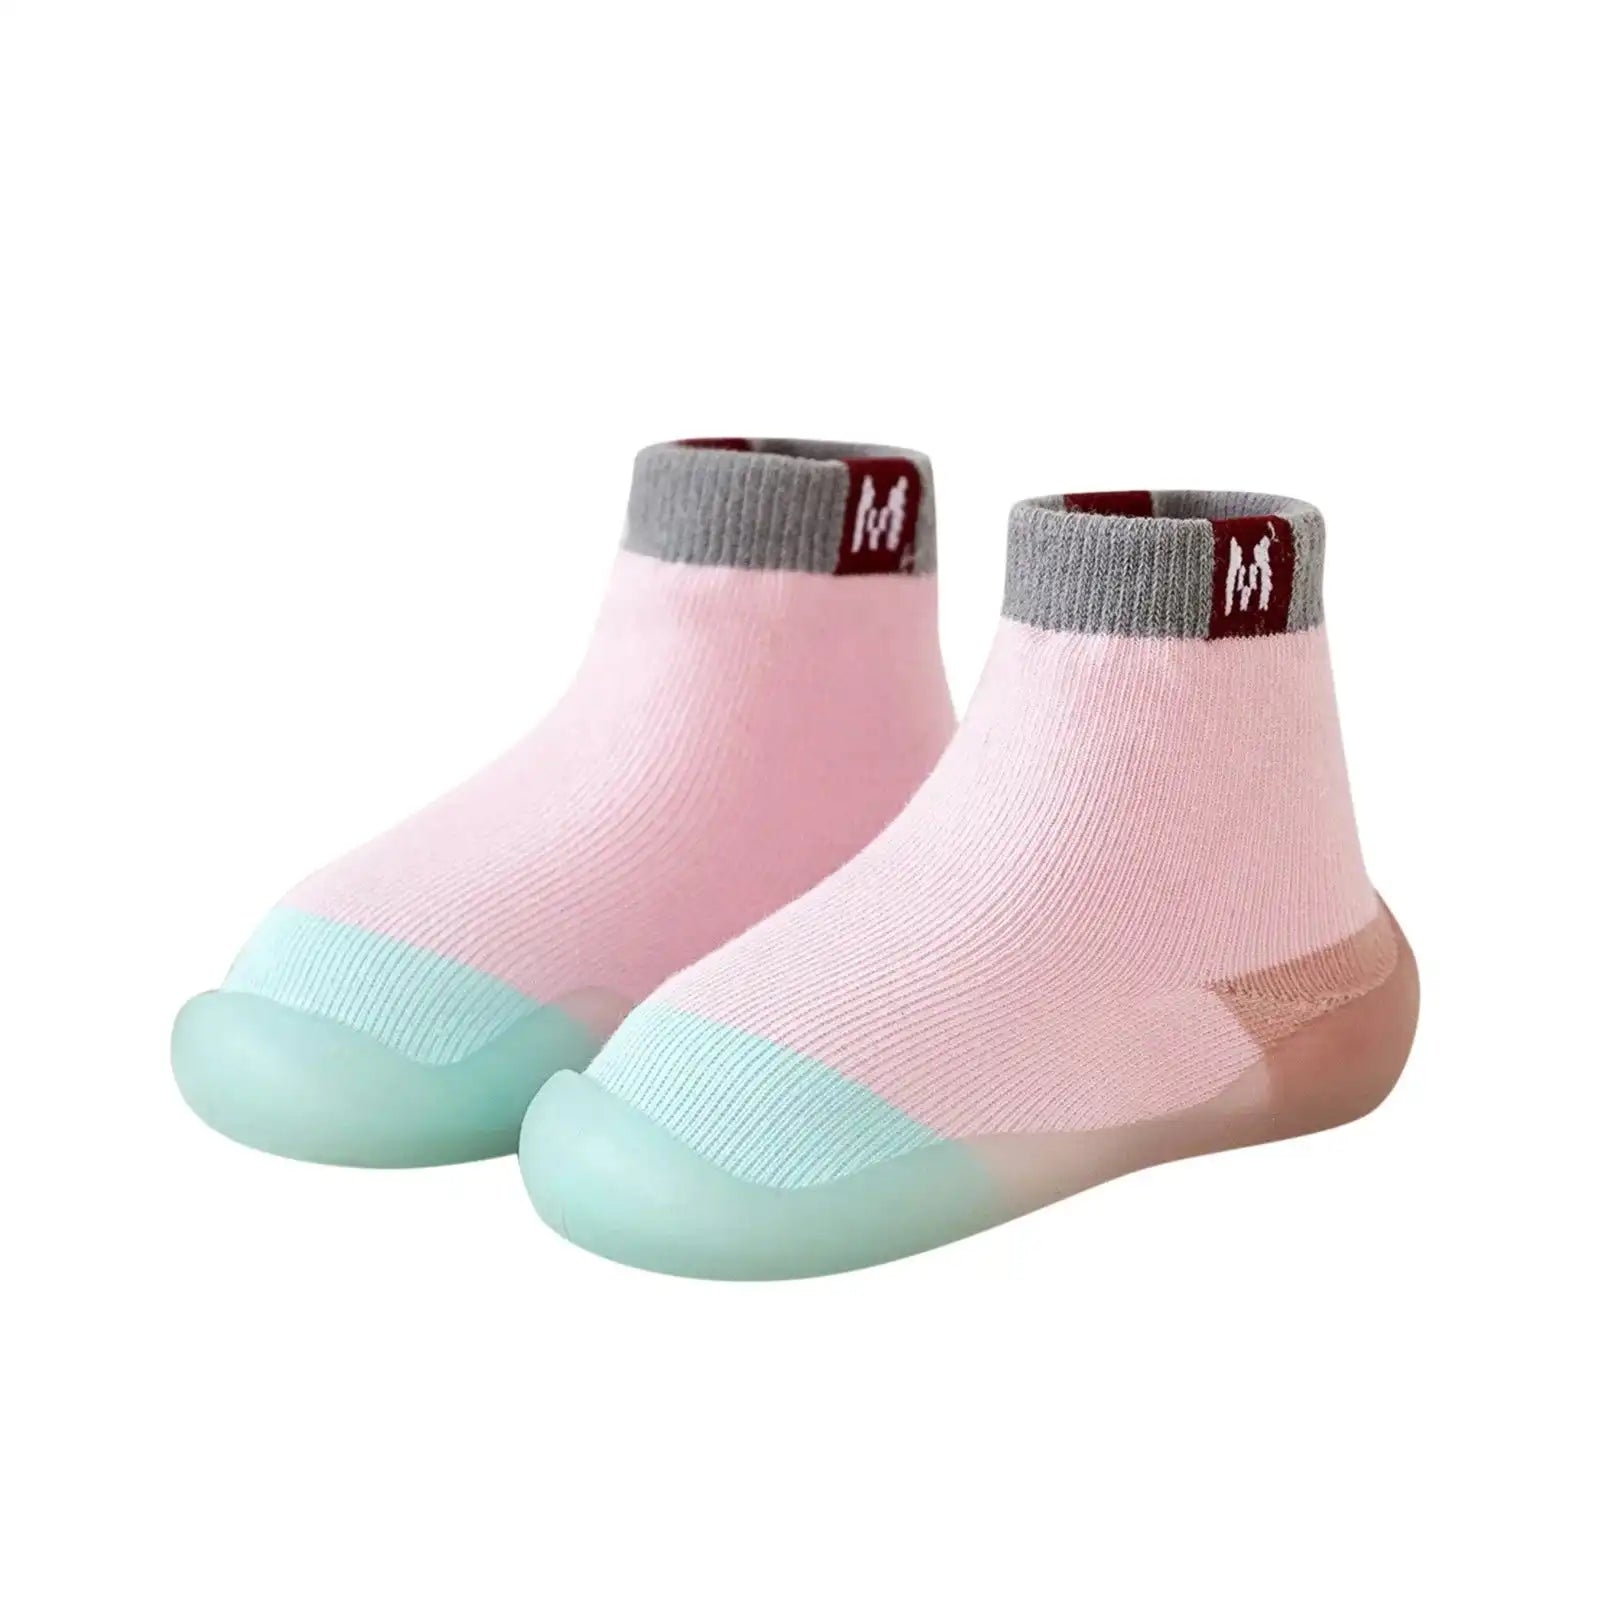 Cartoon Style Room Socks - Non Slip Baby Shoe Socks